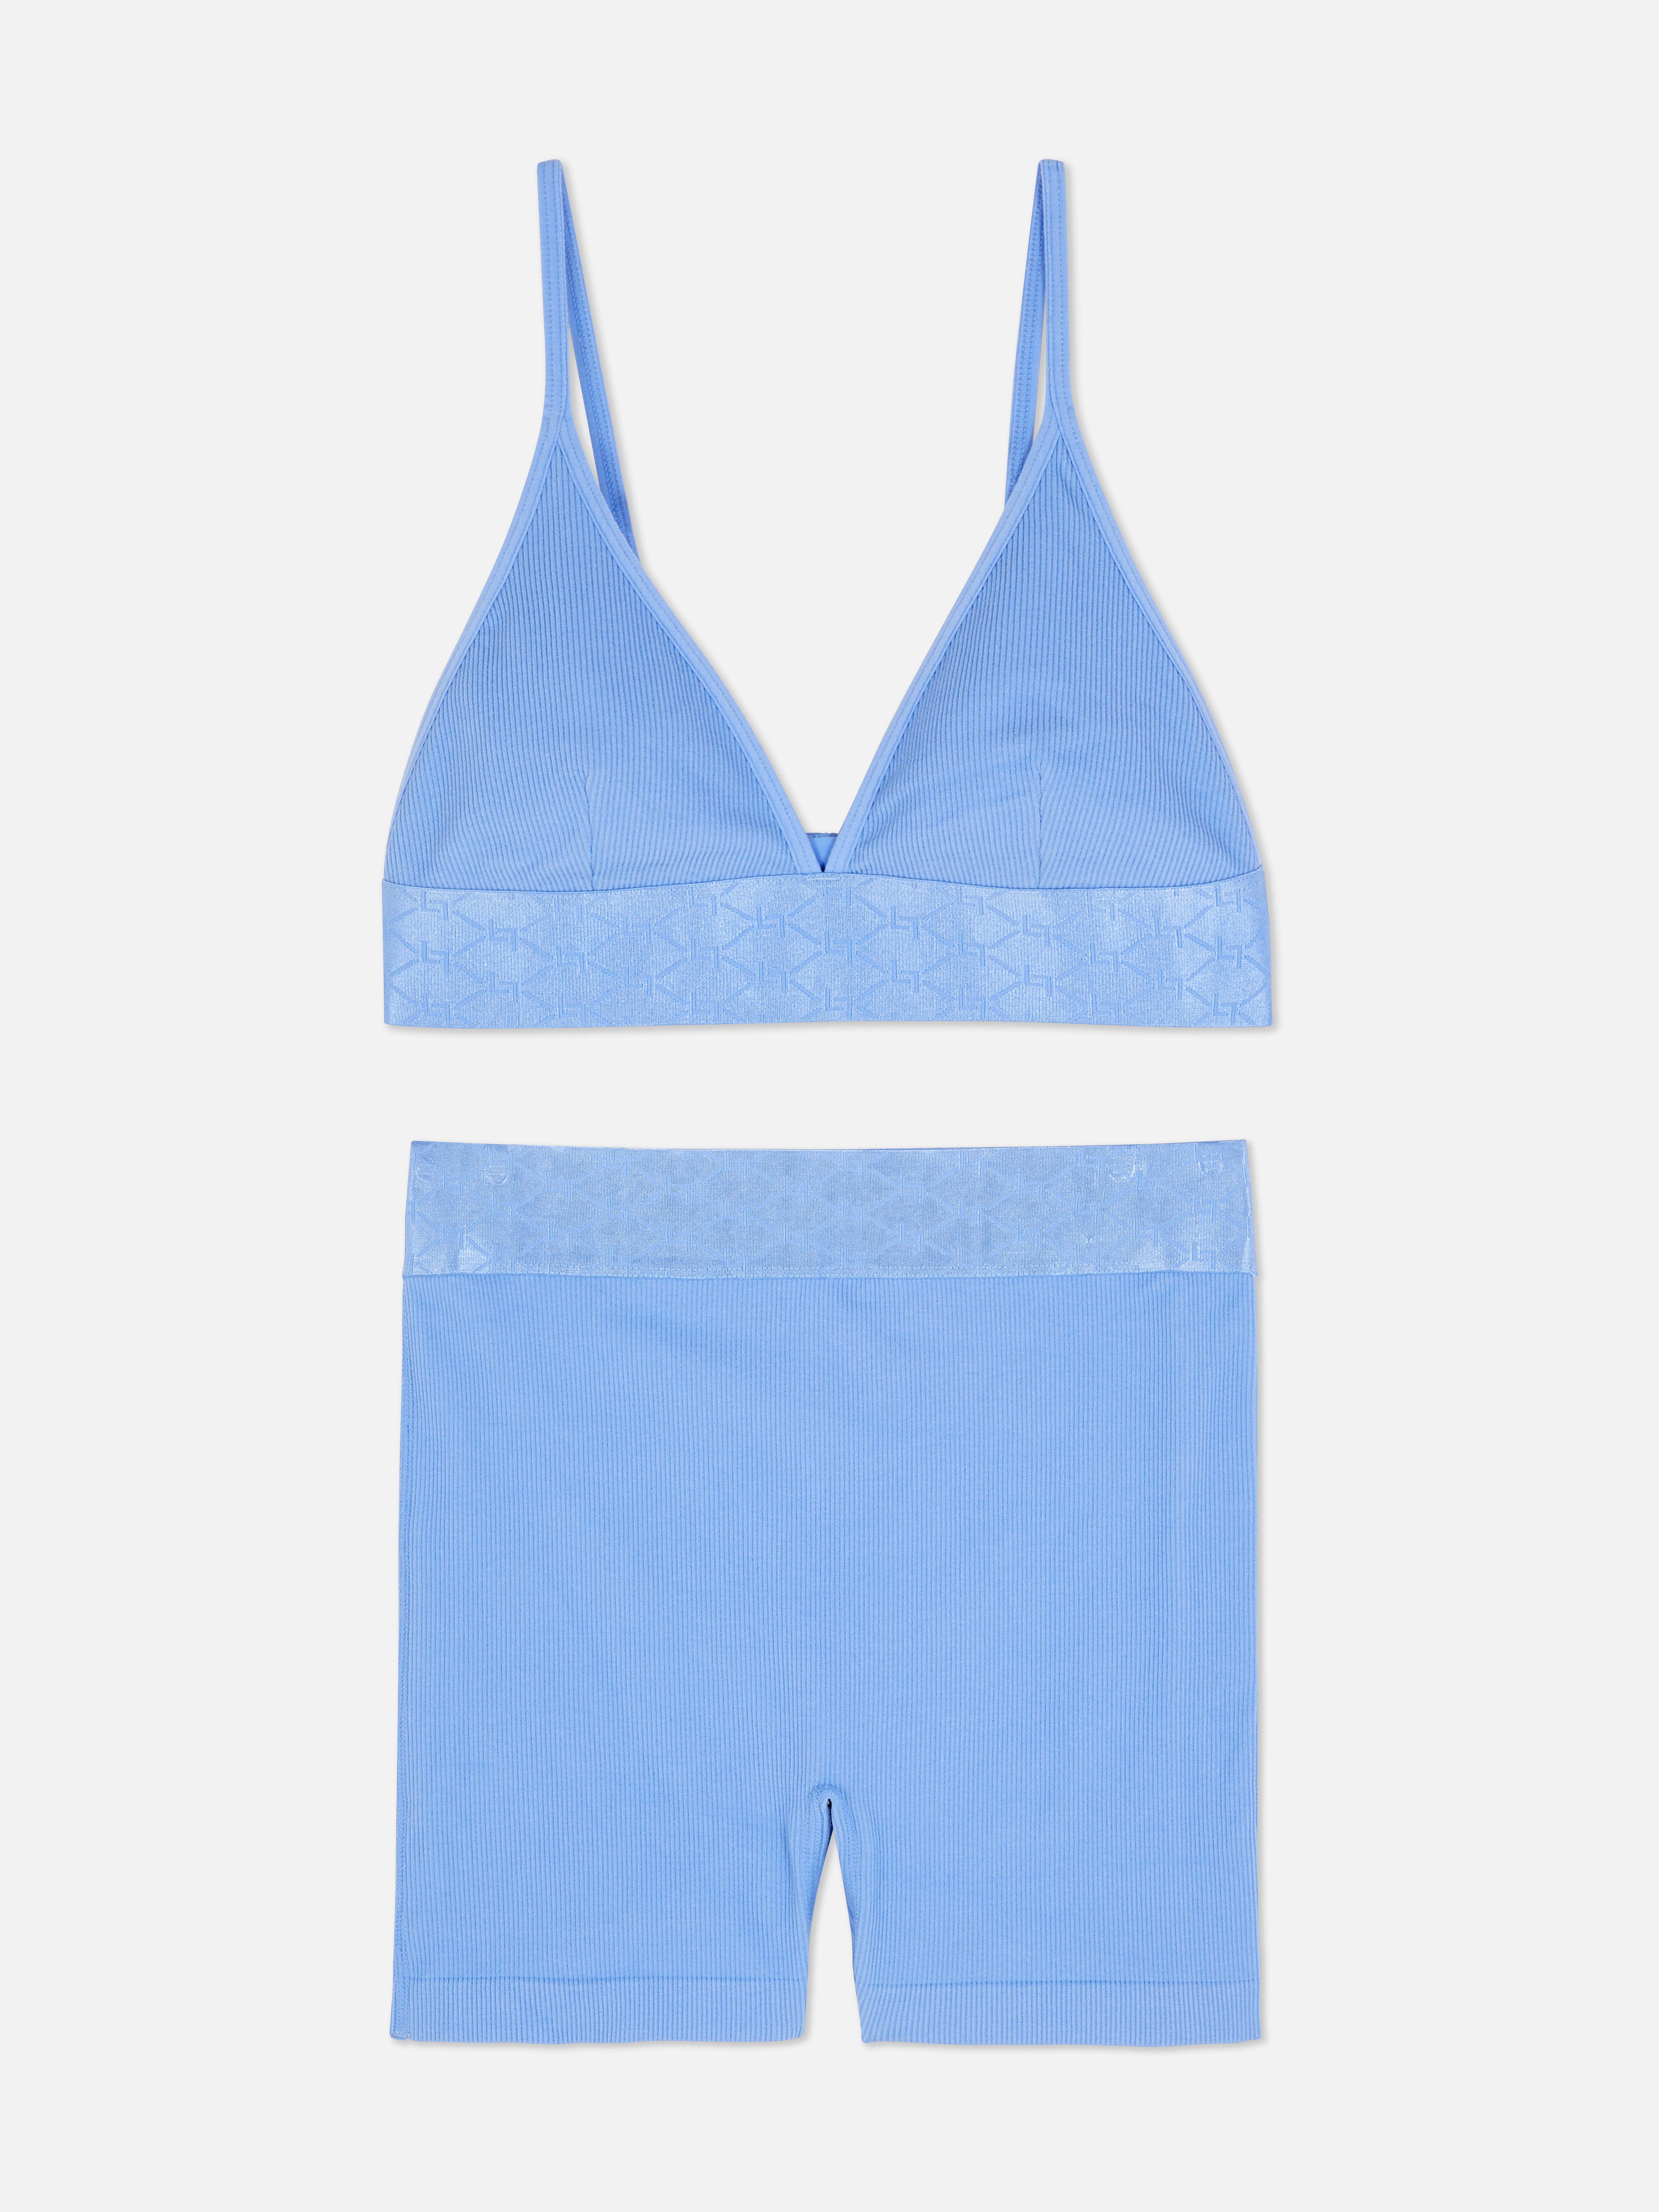 Primark Women's Bra Size 36B Eur 80B Blue & White Non-Wired Comfort Cotton  Blend